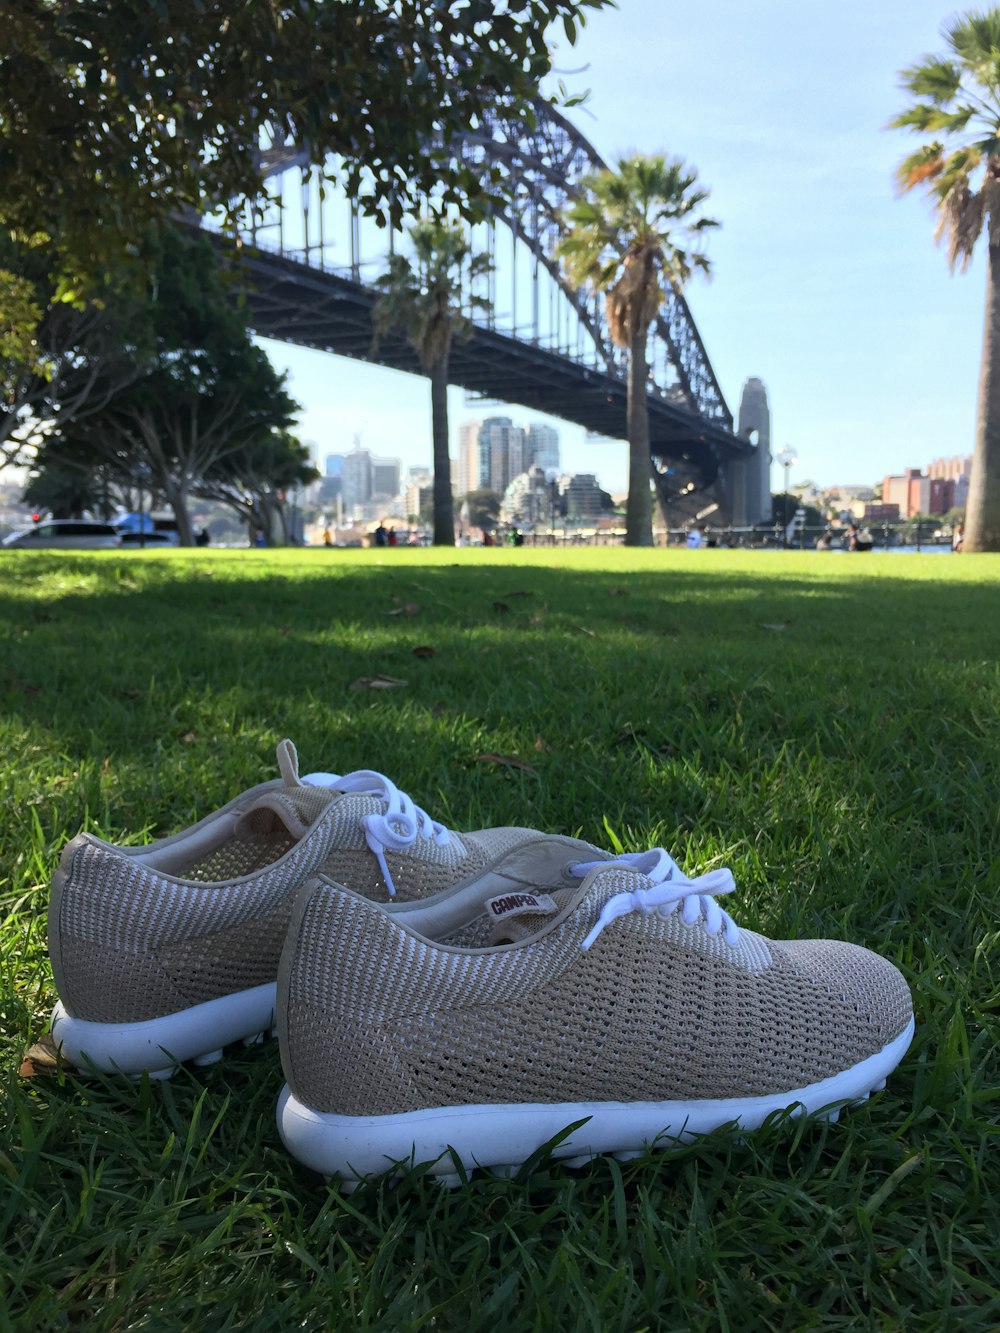 brown low-top shoes on grass near bridge